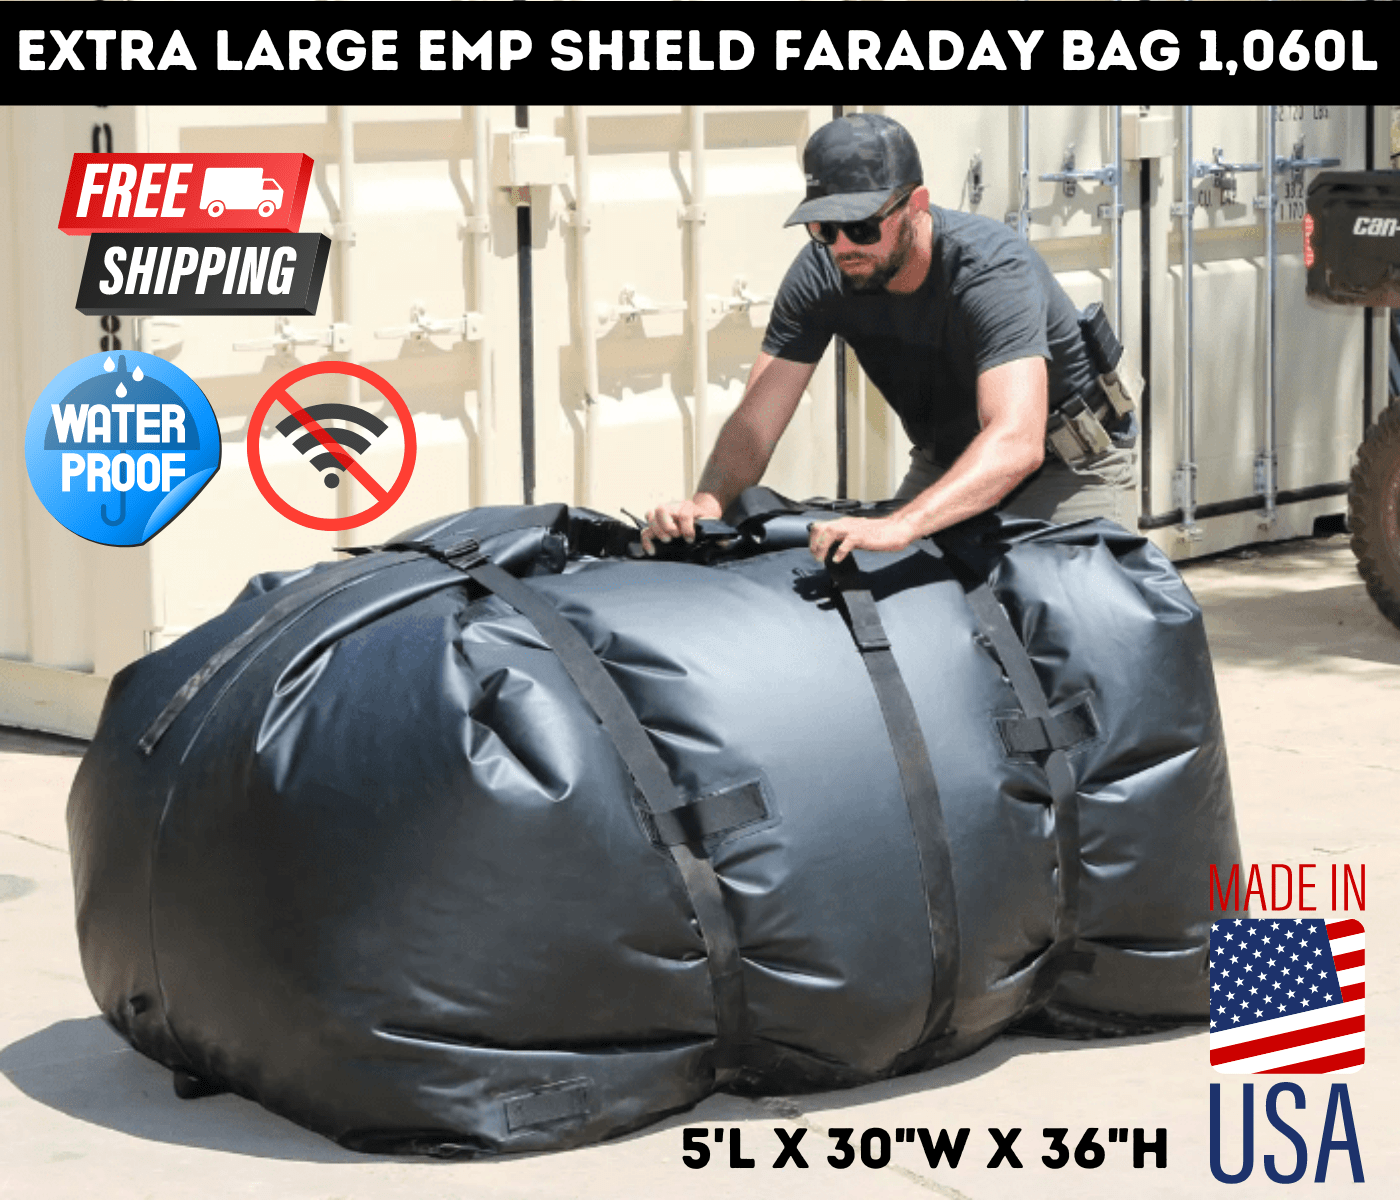 Extra Large EMP Shield Faraday Bag 1,060L | Weatherproof, Waterproof, Signalproof (Rapture) SunVoyage Faraday Bag